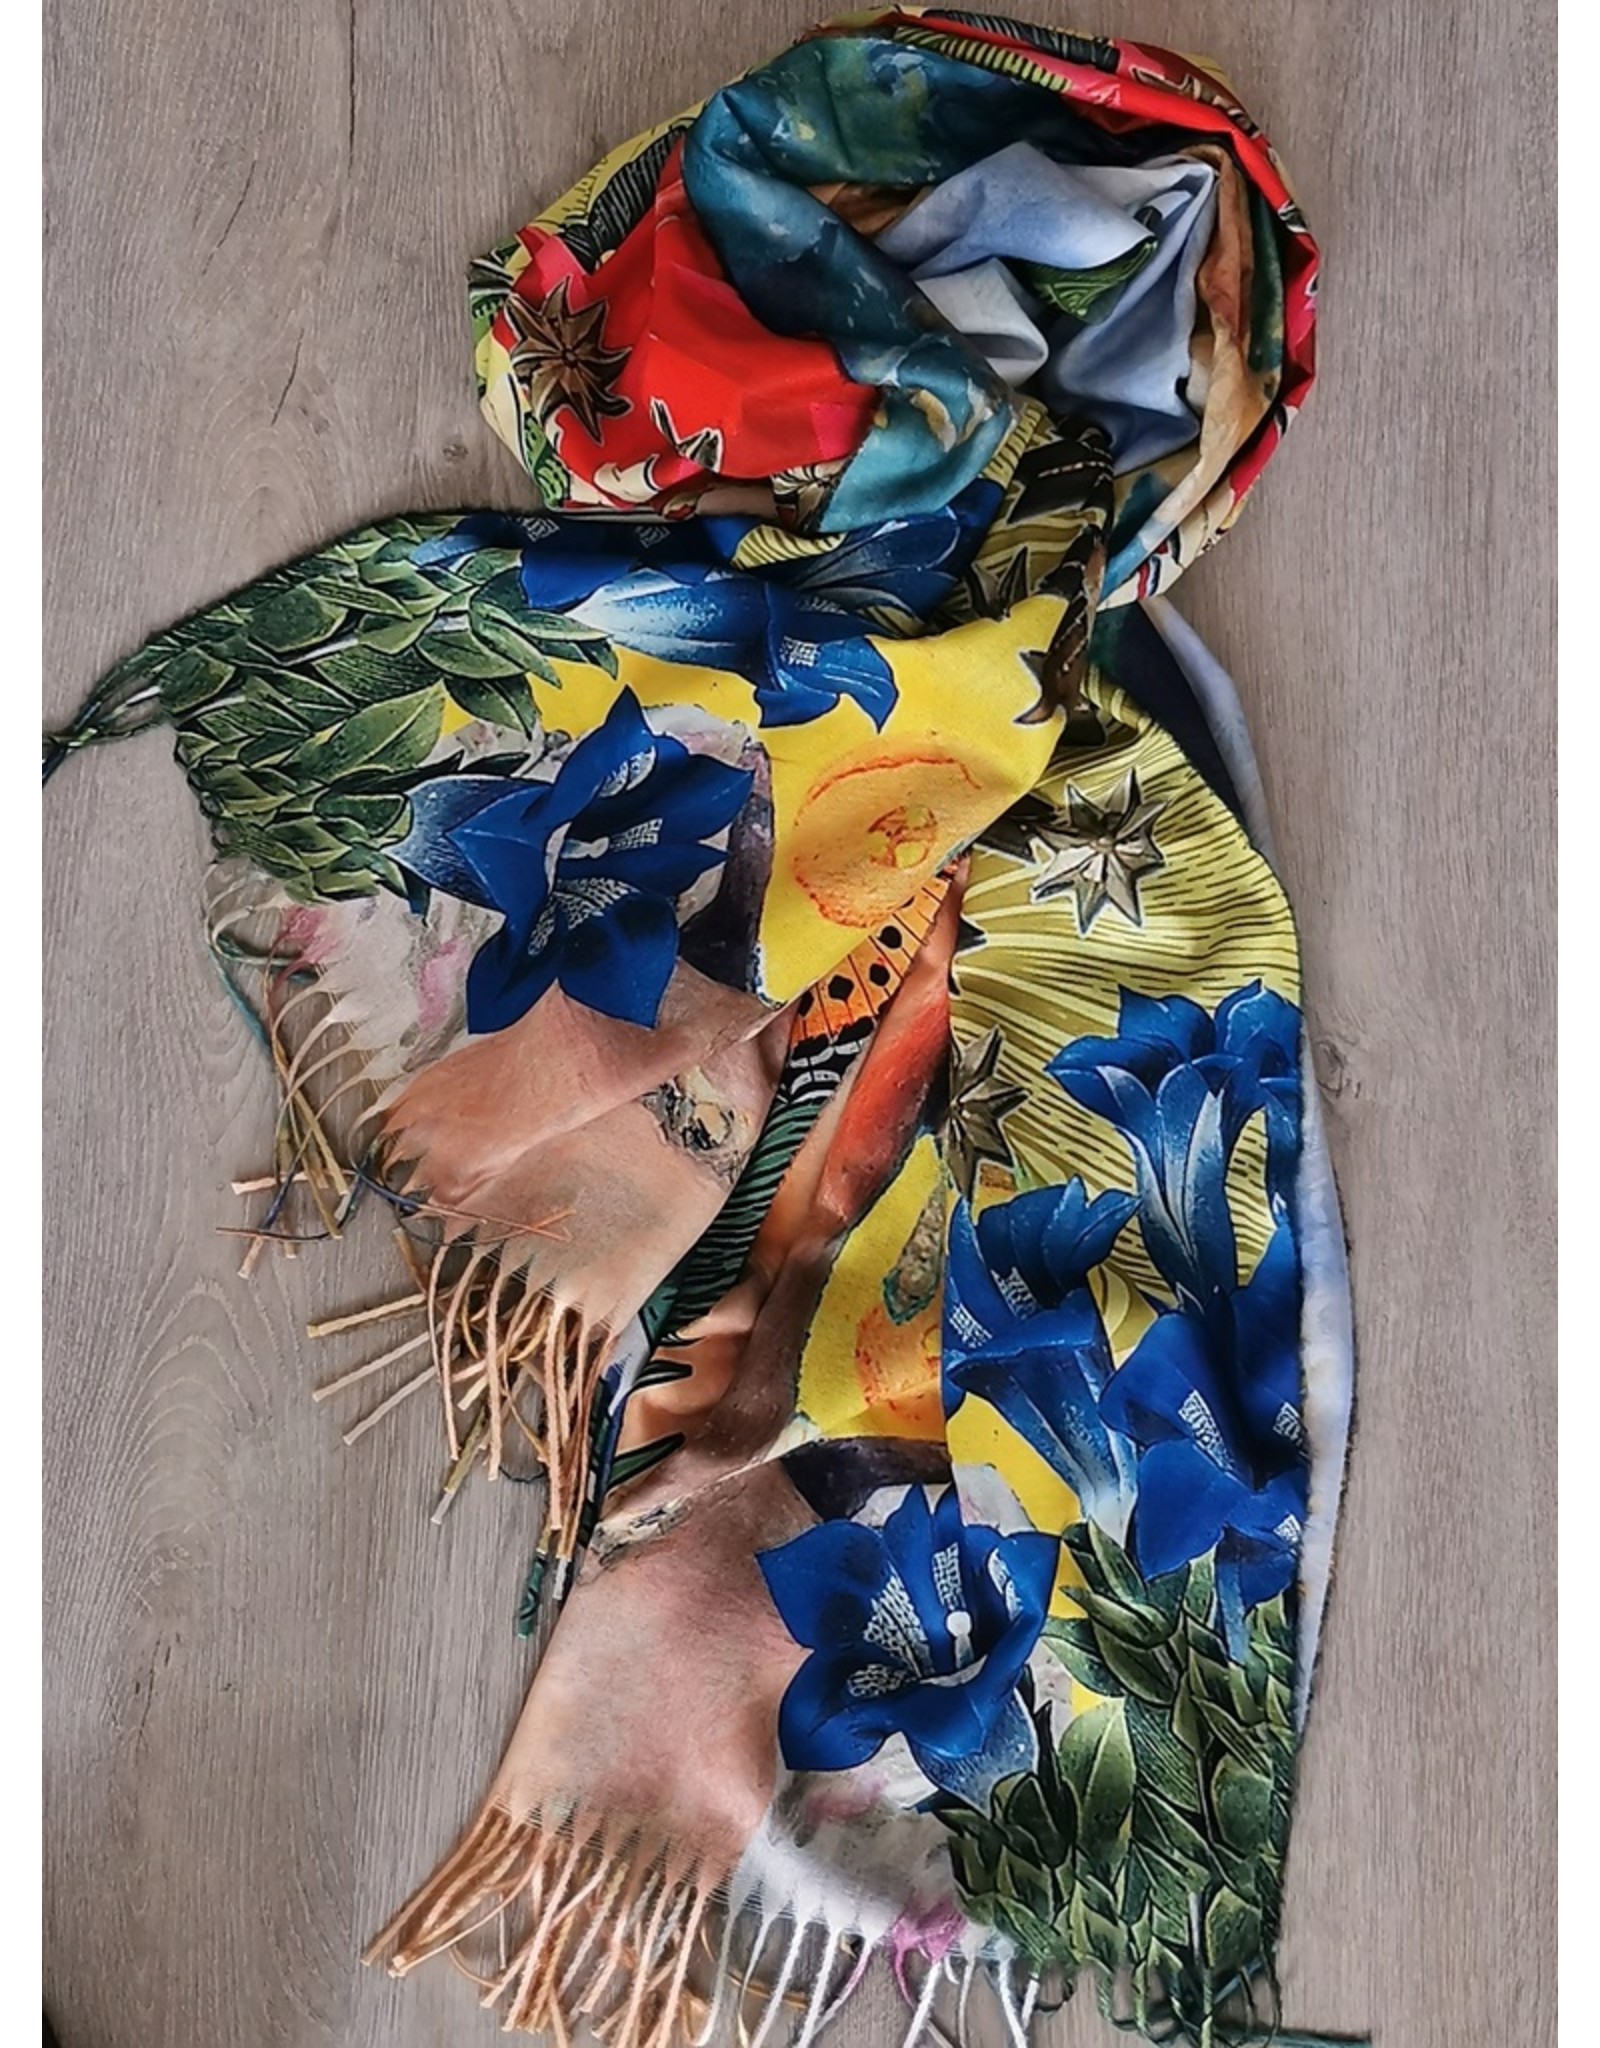 Trukado Miscellaneous - Frida Kahlo Shawl-Wraparound  180cm x 70cm